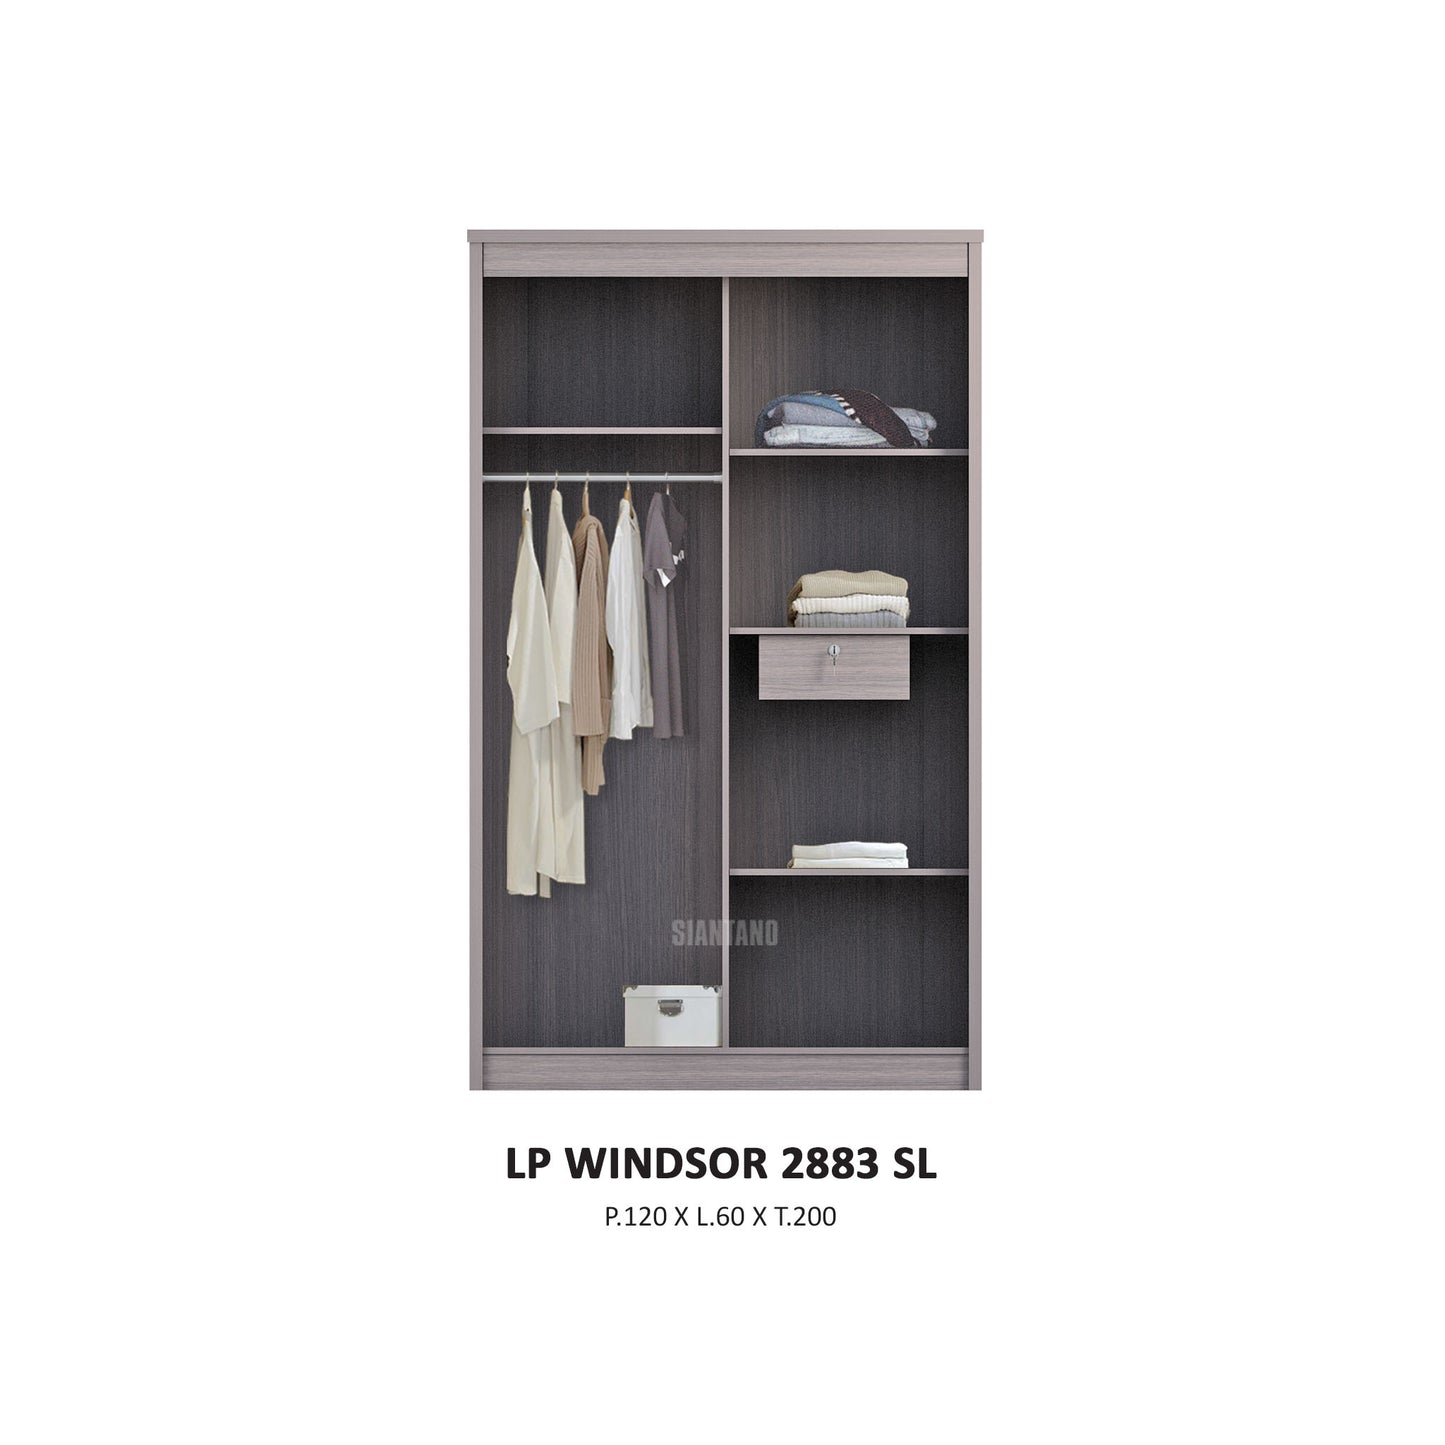 LP WINDSOR 2883 SL